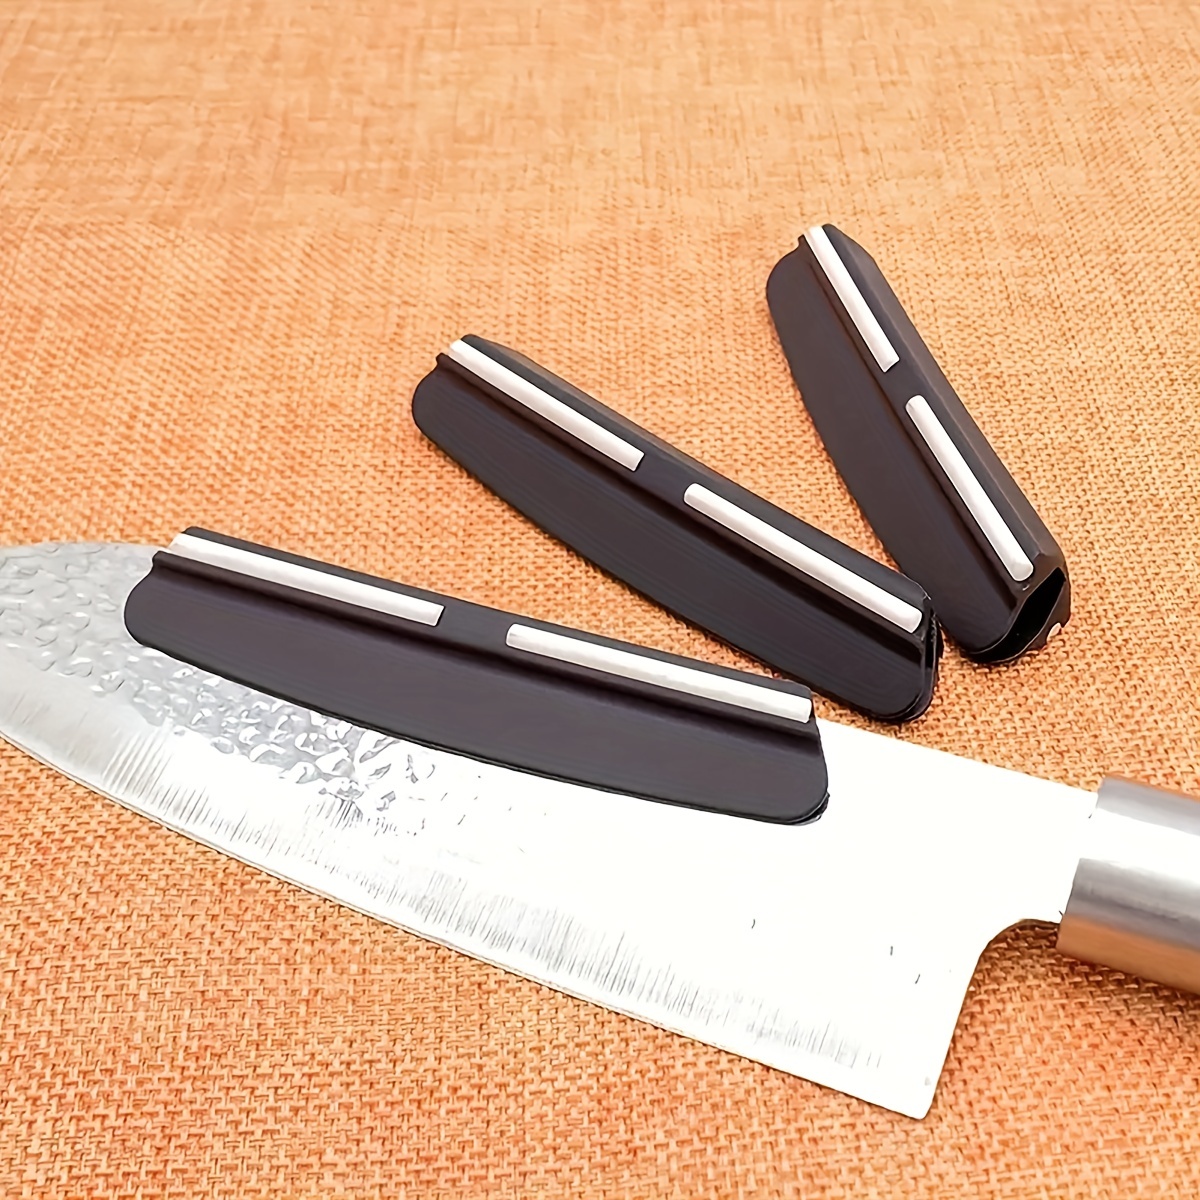 2pcs, Professional Knife Sharpening Guide, Random Knife Sharpener Angle  Guide, Sharpening Guide For Whetstone, Angle Guide Knife Sharpener Fixed  Tools